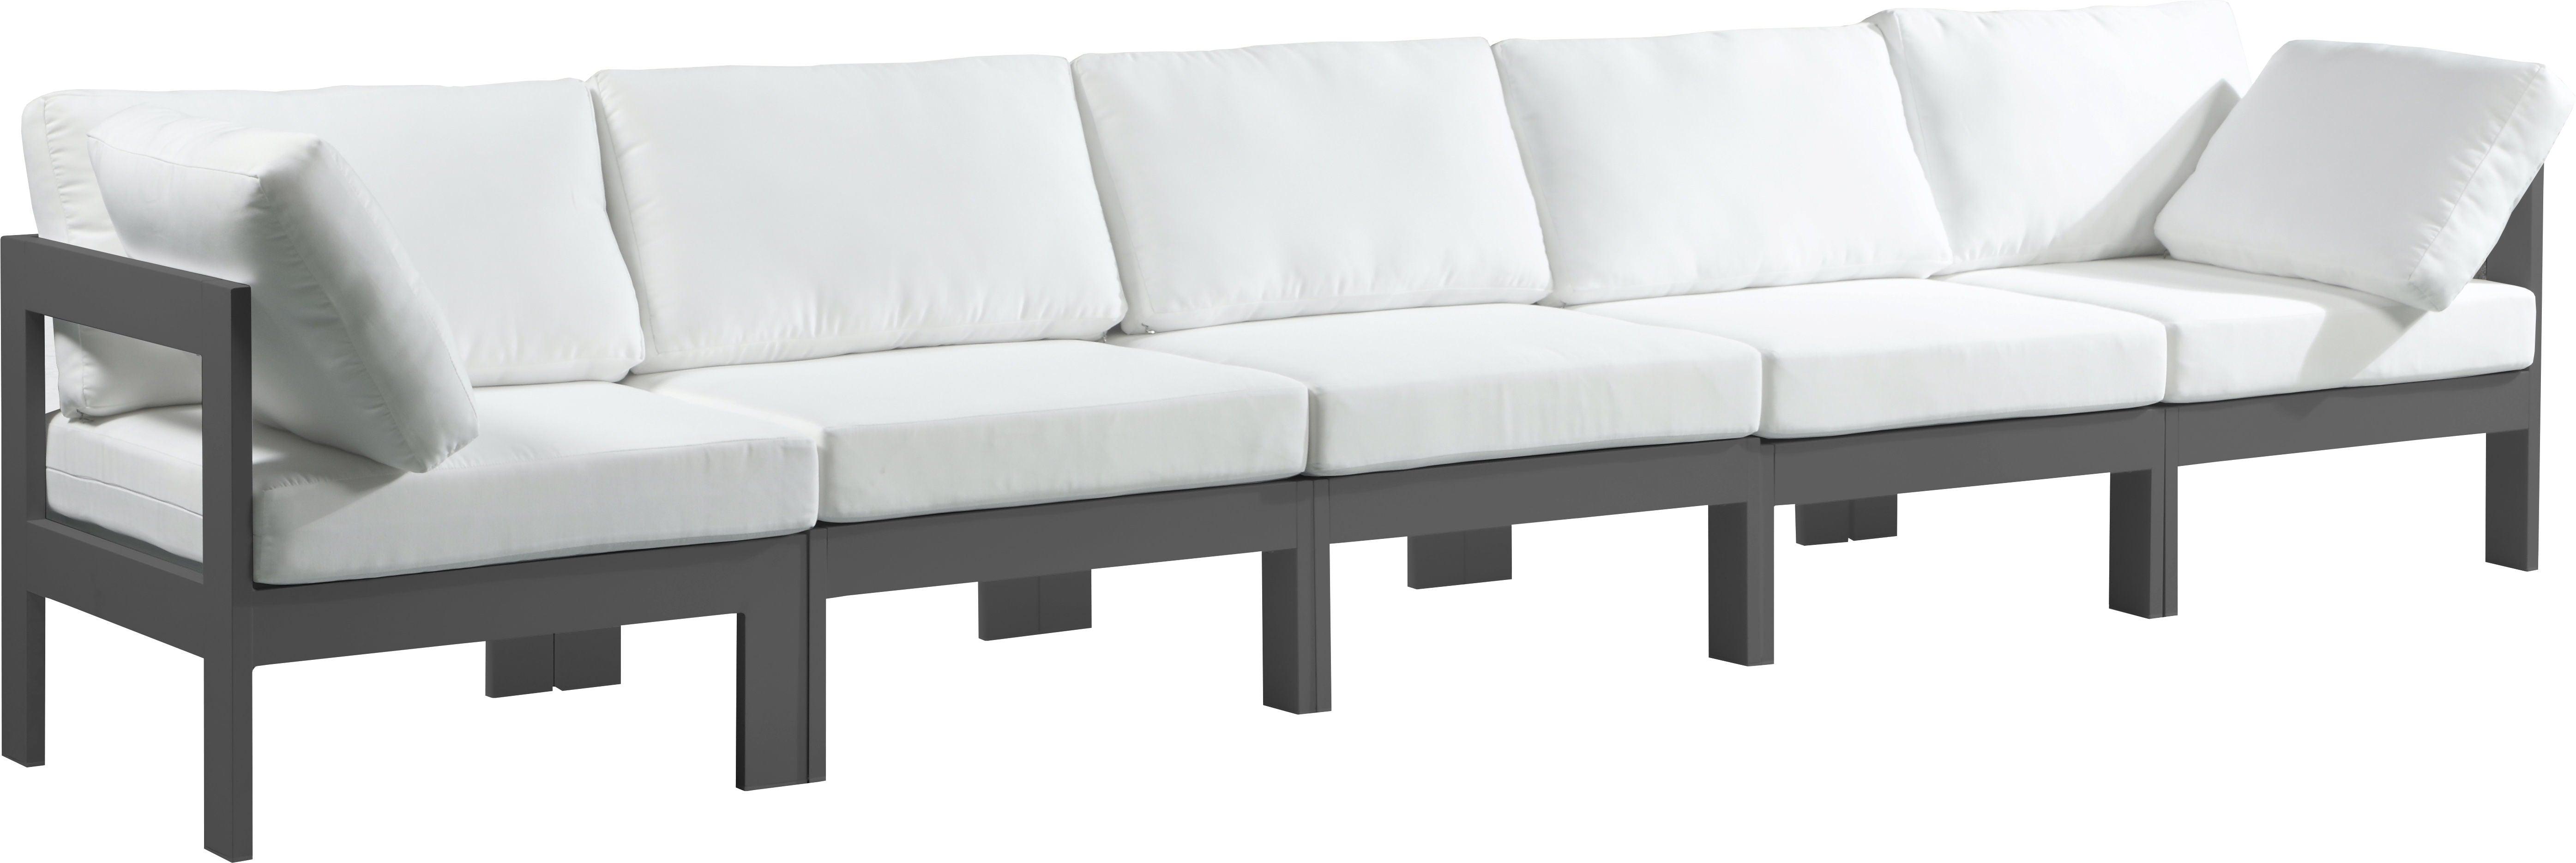 Meridian Furniture - Nizuc - Outdoor Patio Modular Sofa With Frame - White - Modern & Contemporary - 5th Avenue Furniture